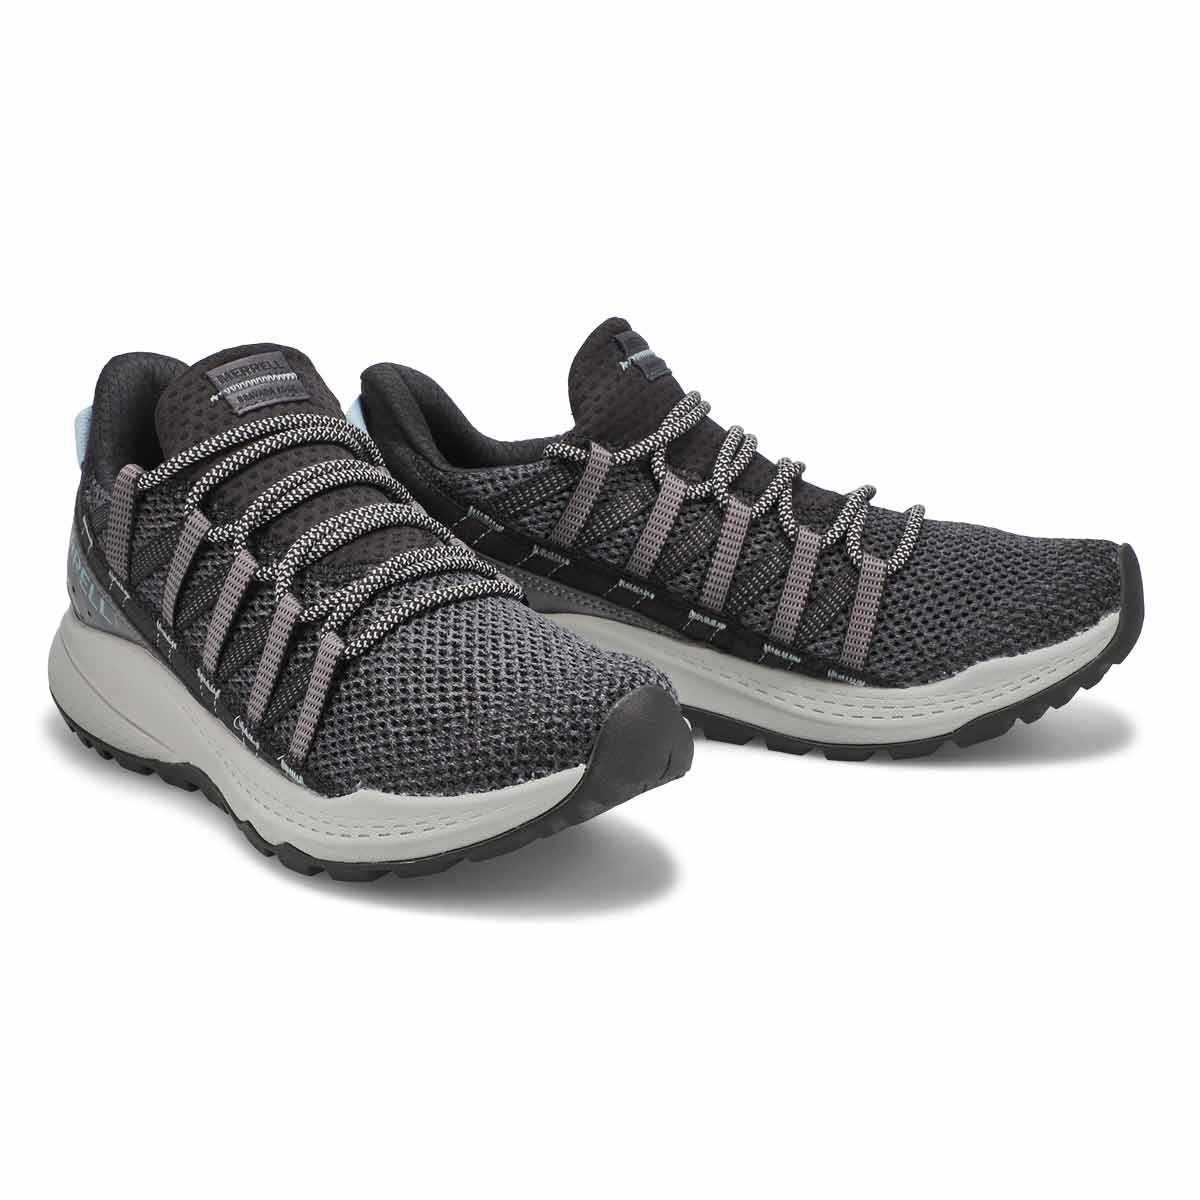 Merrell Bravada Waterproof Hiking Trail Shoes Women's Size 9.5 J036026